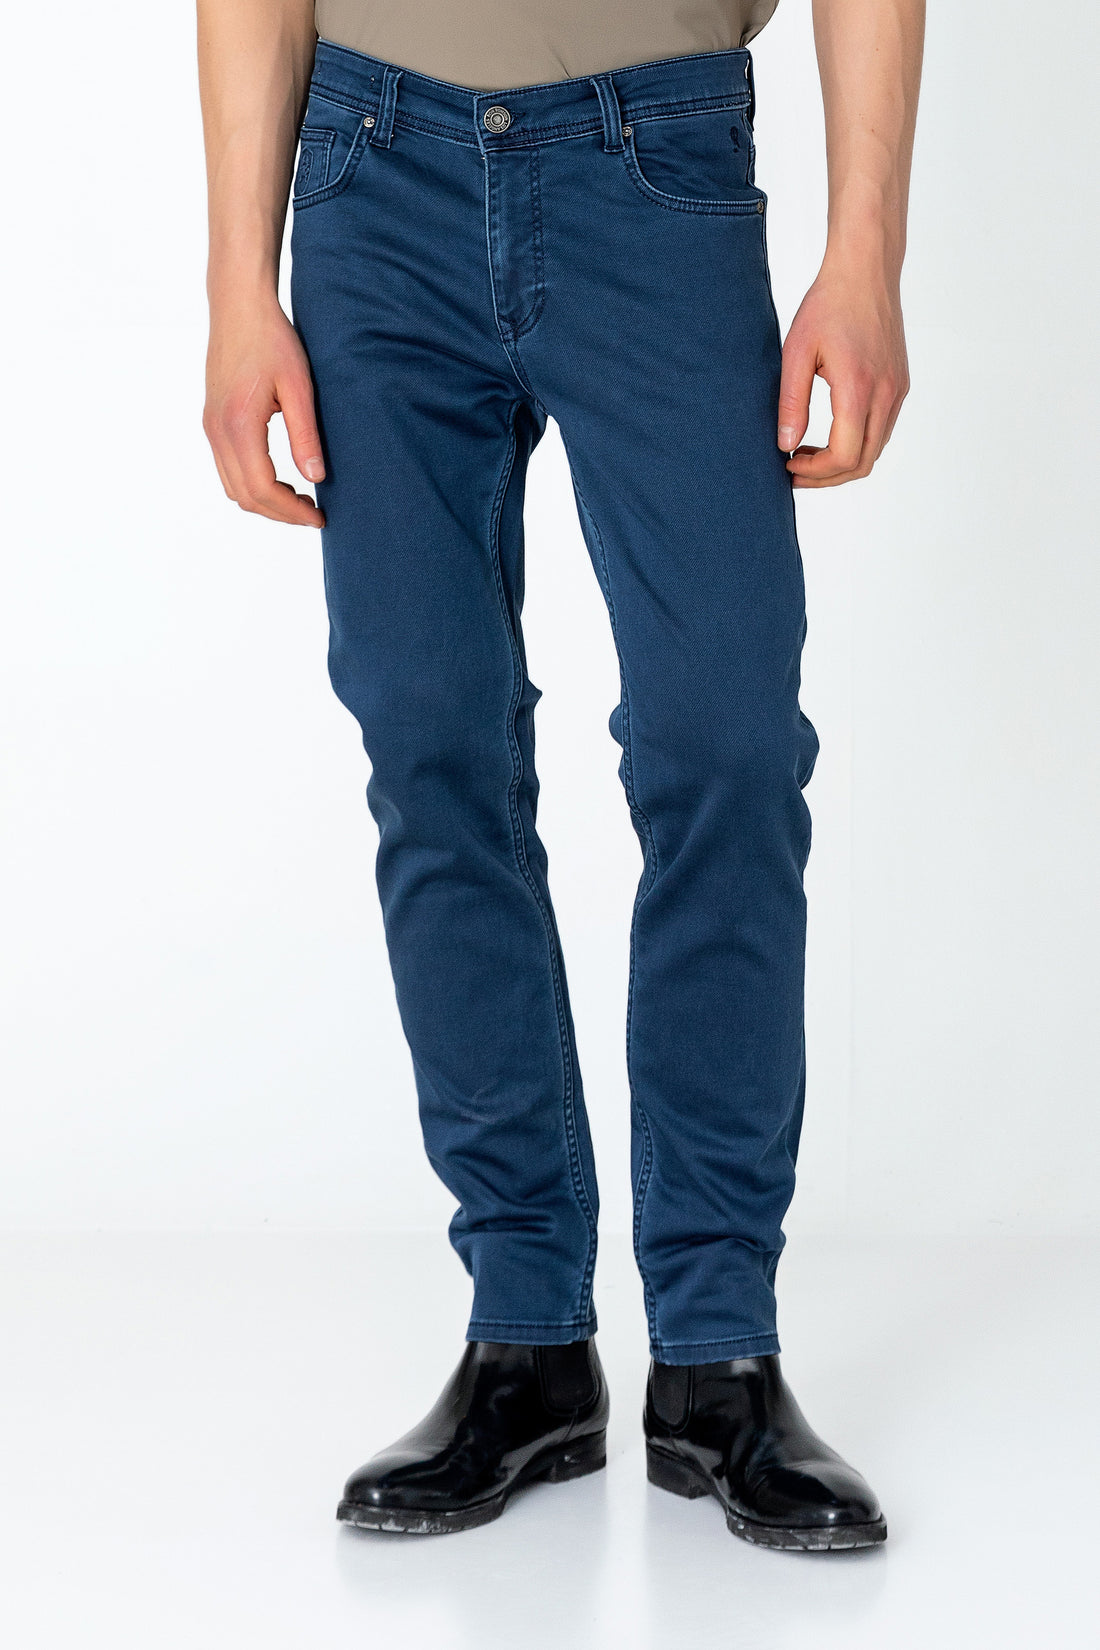 Super Soft 5-pocket Style Pants - Dark Navy